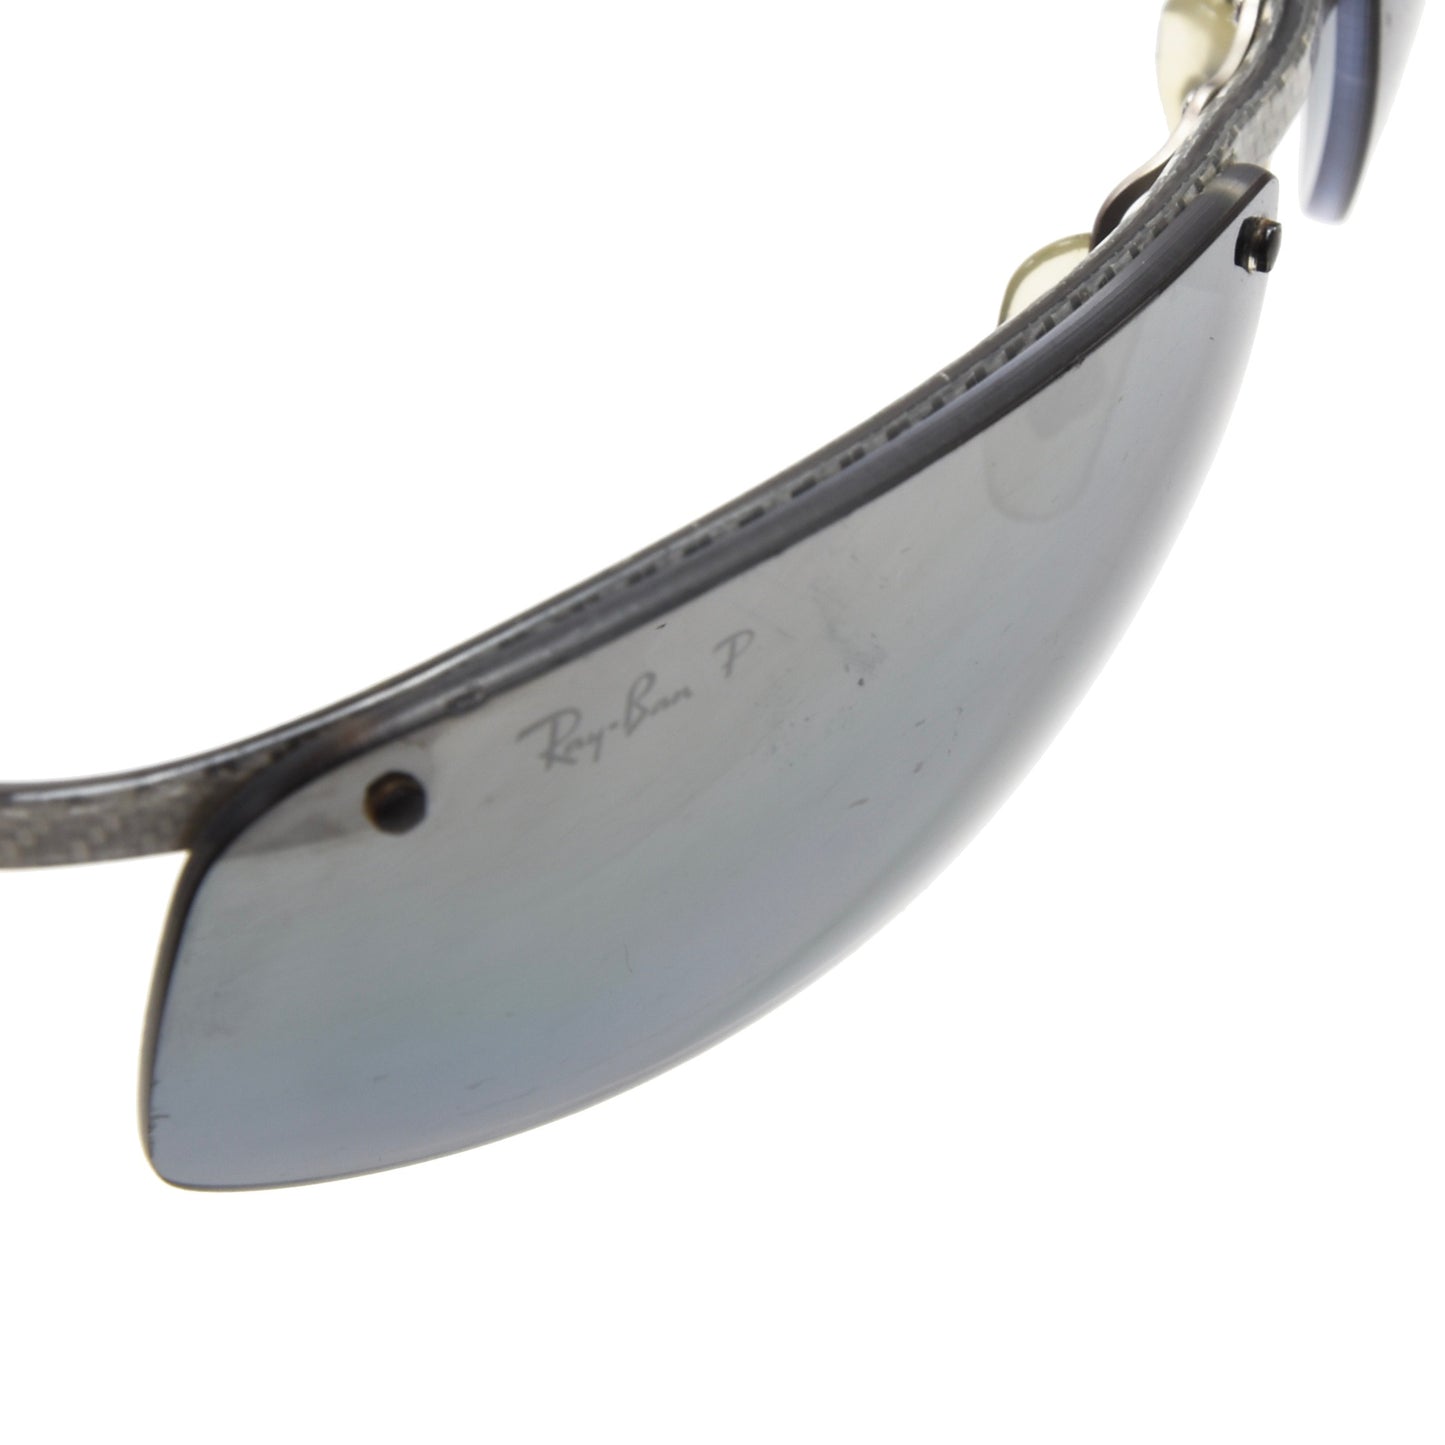 Ray-Ban Polarized Sunglasses RB 8305 - Carbon Fiber